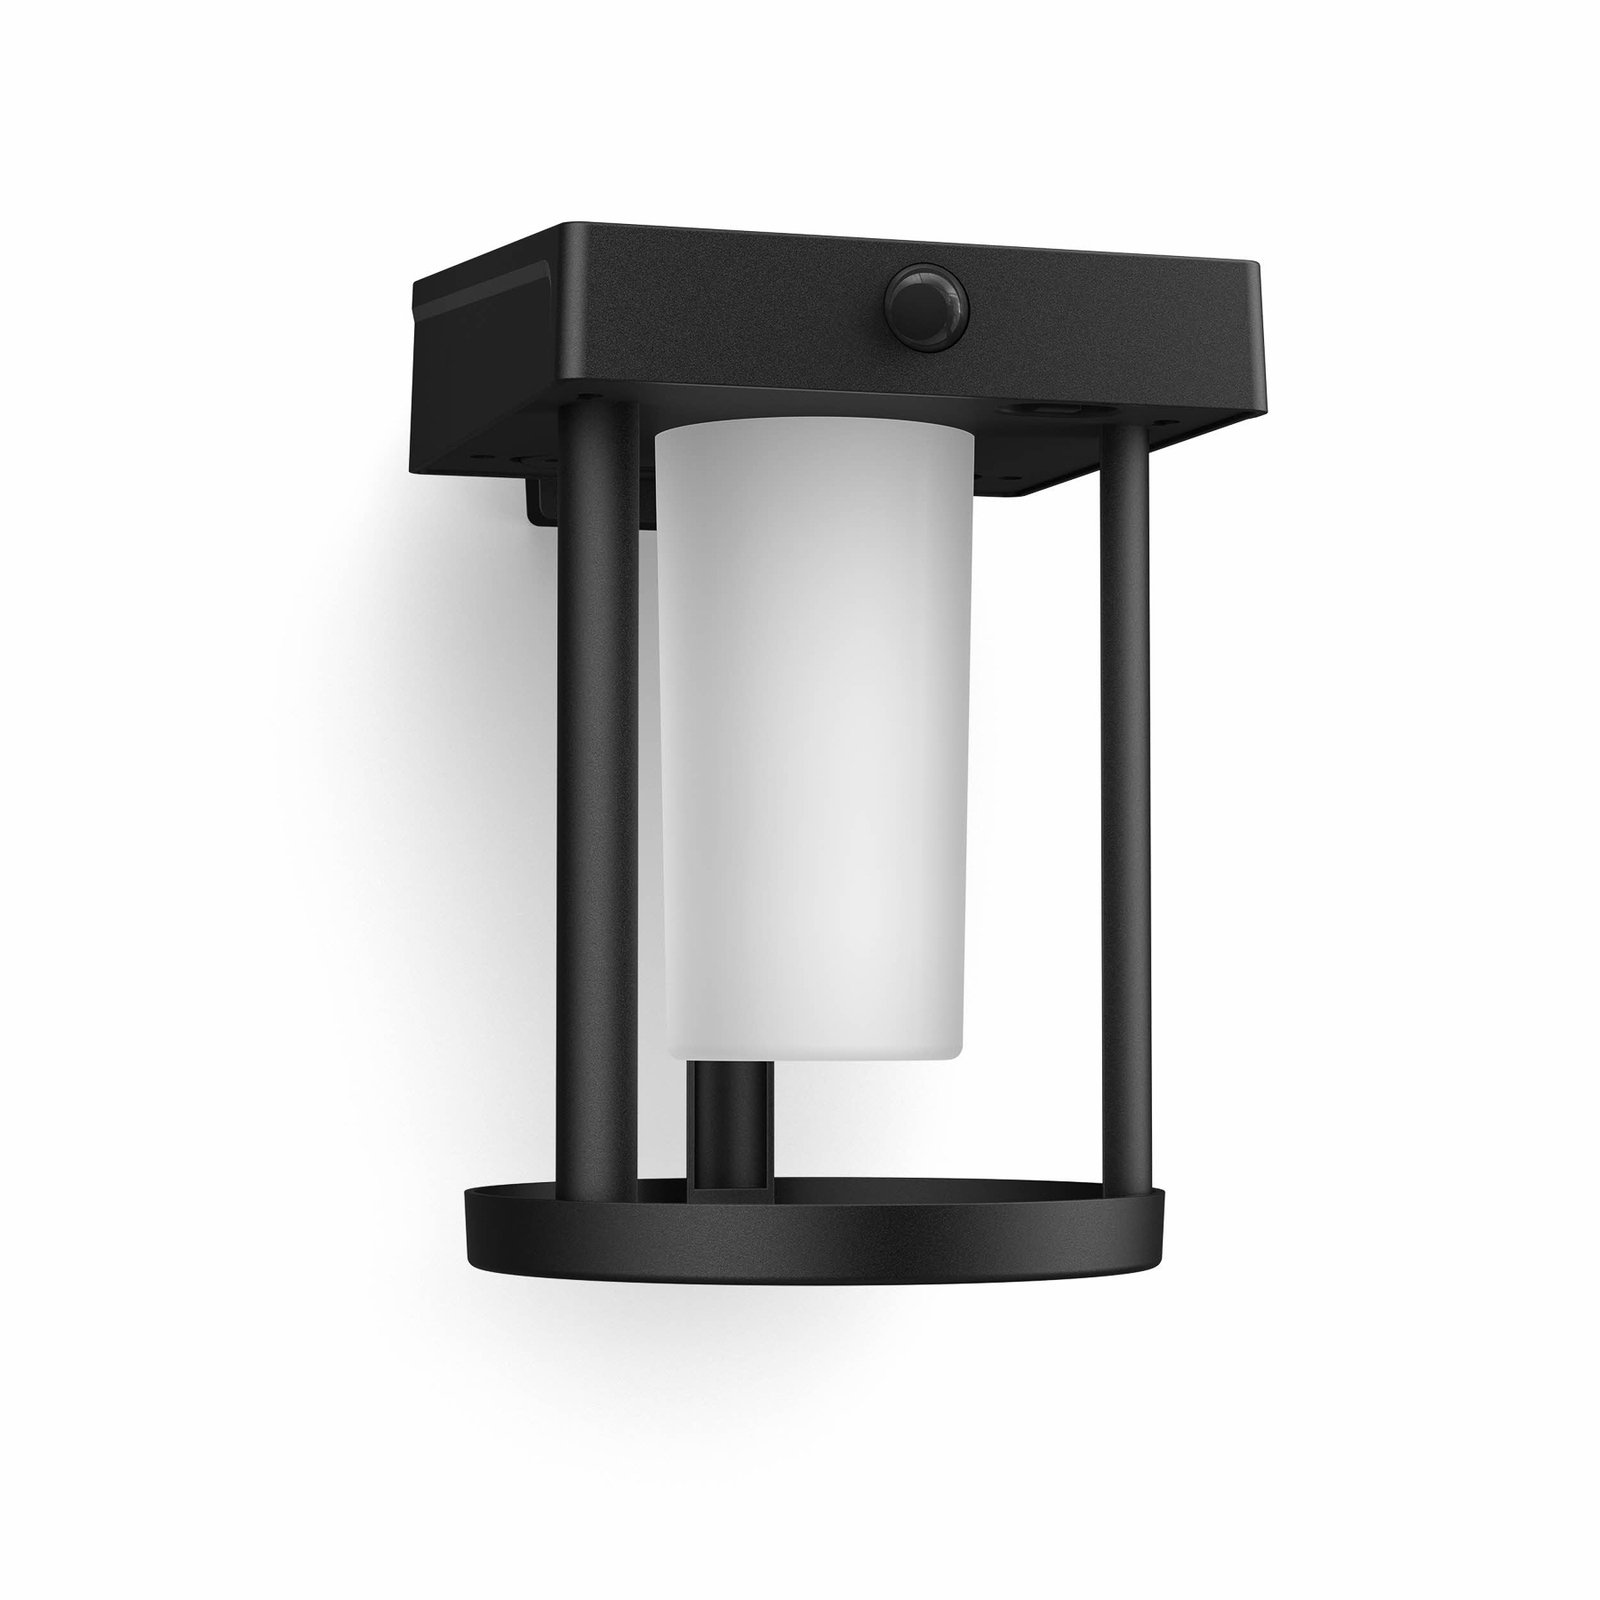 Philips LED wall lamp Camill, black/white, Ø 14 cm